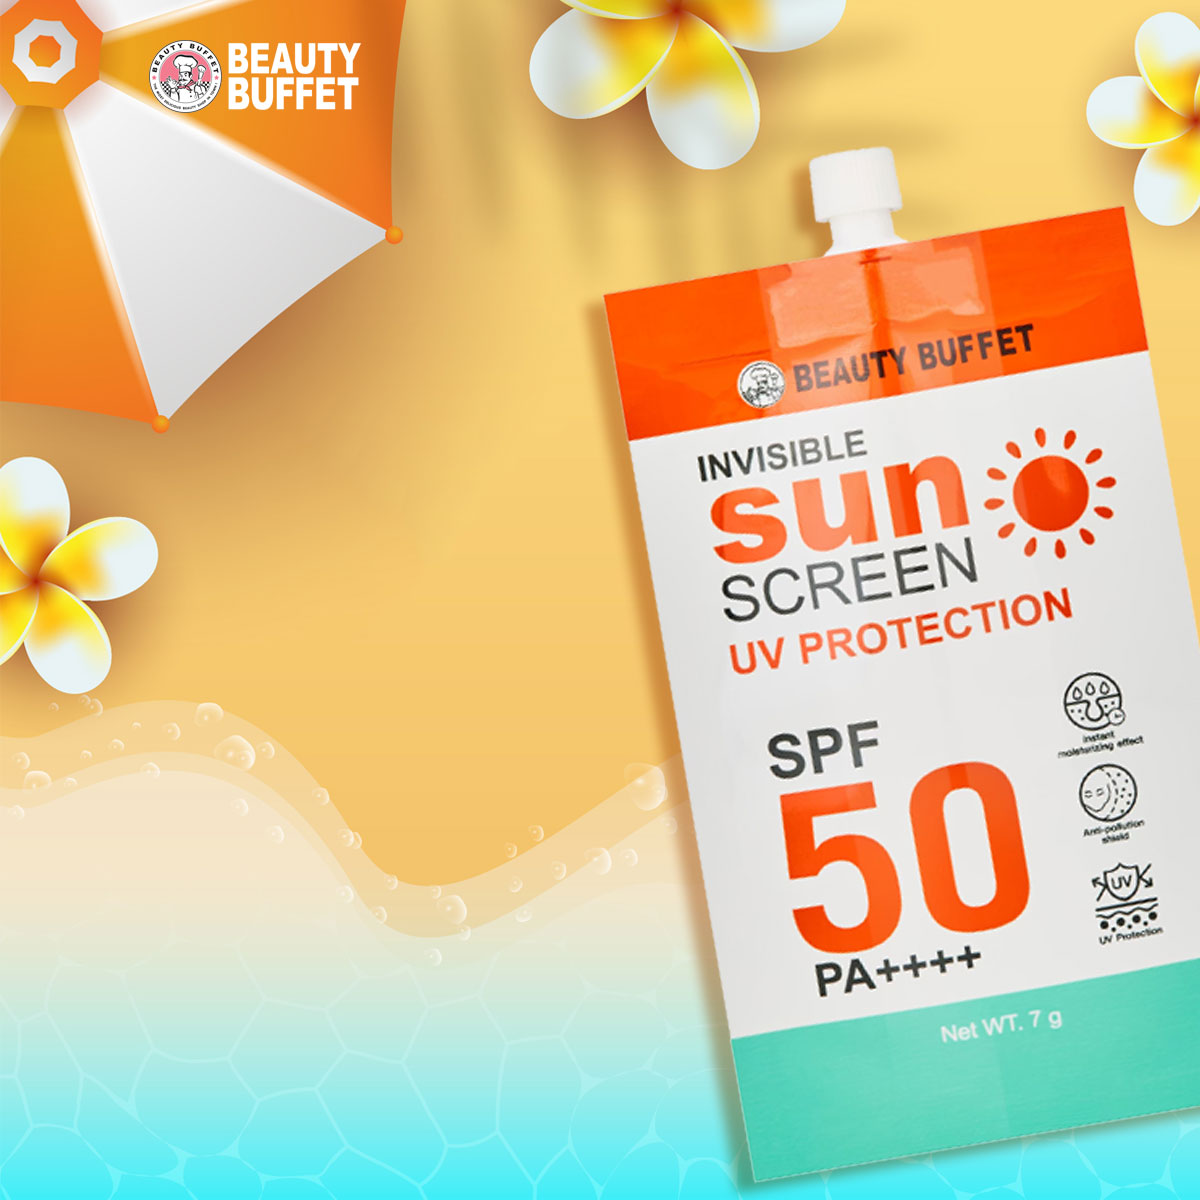 Kem chống nắng cho mặt Beauty Buffet Invisible Sunscreen UV Protection SPF 50 PA++++ 7g